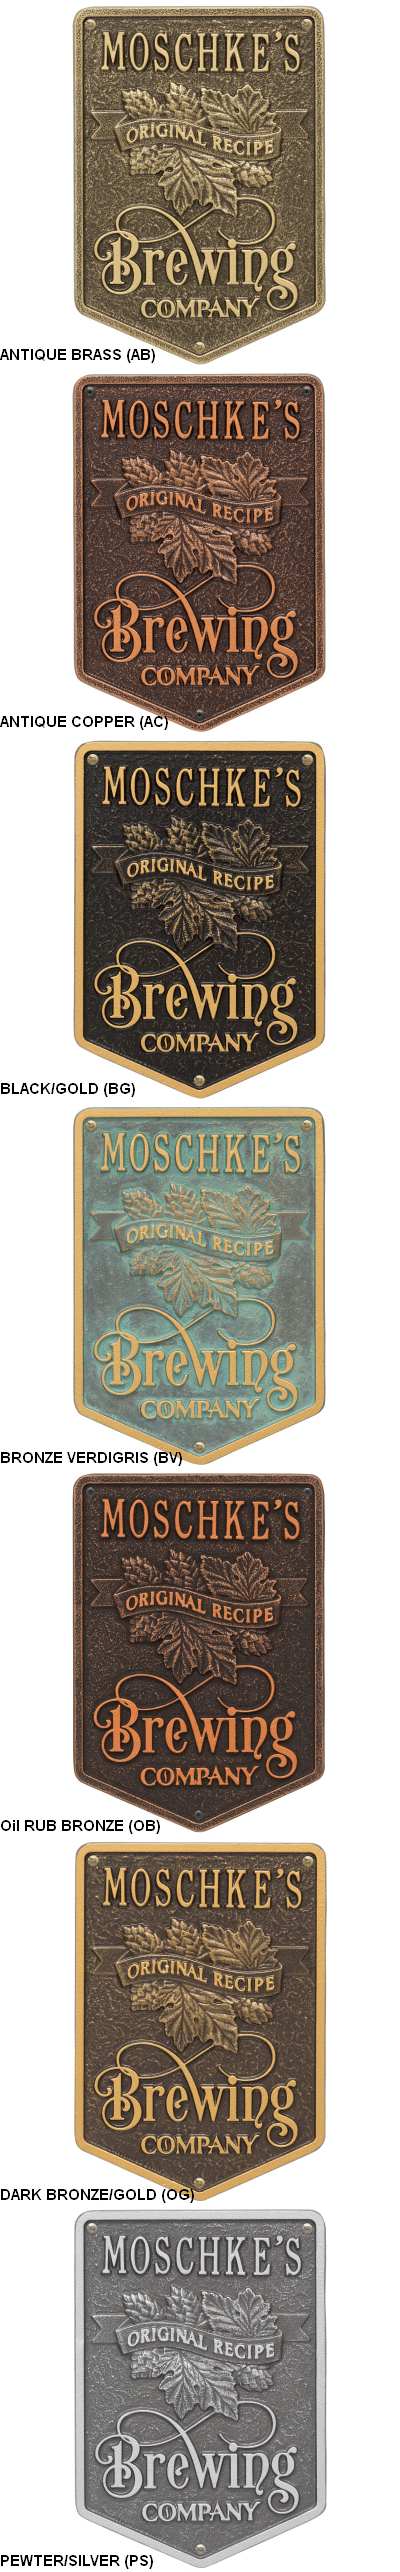 Original Recipe Brewing Company Personalized Beer Plaque